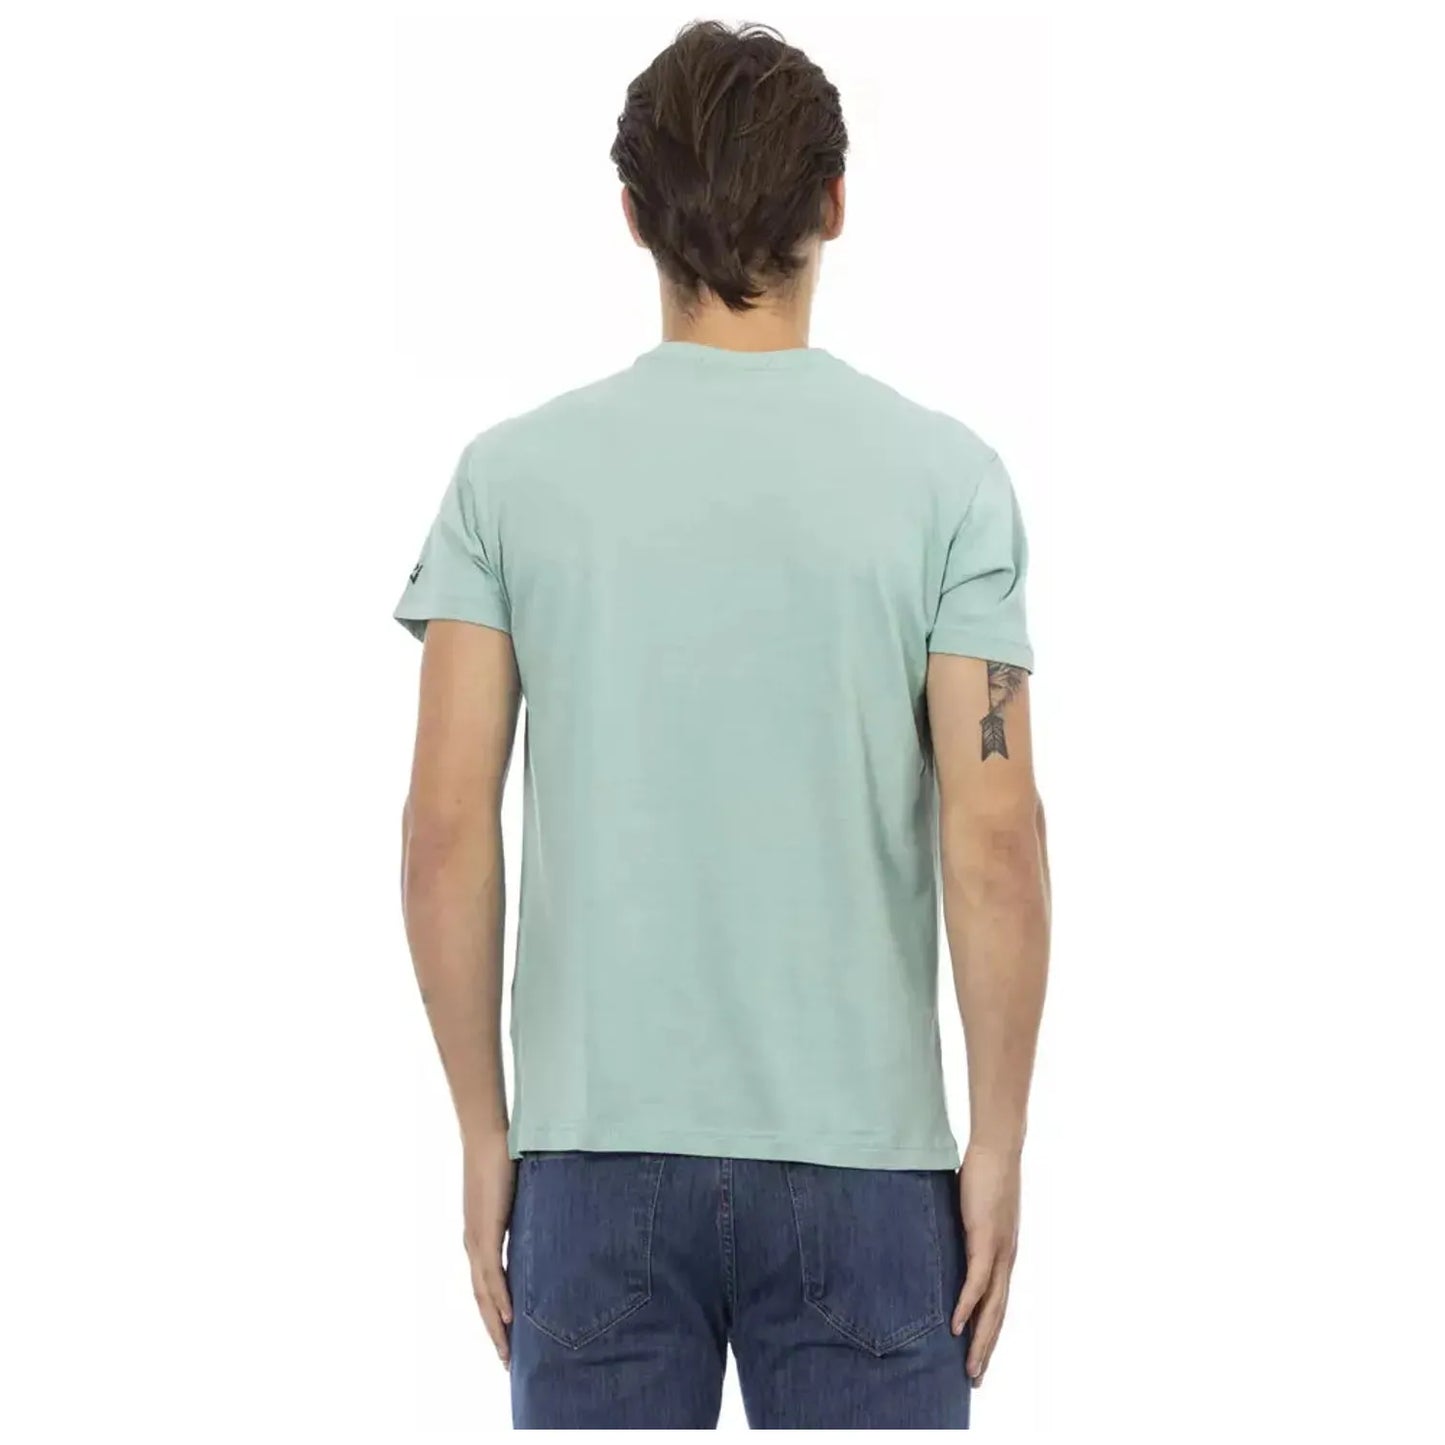 Trussardi Action Elegant Short Sleeve V-Neck Tee green-cotton-t-shirt-34